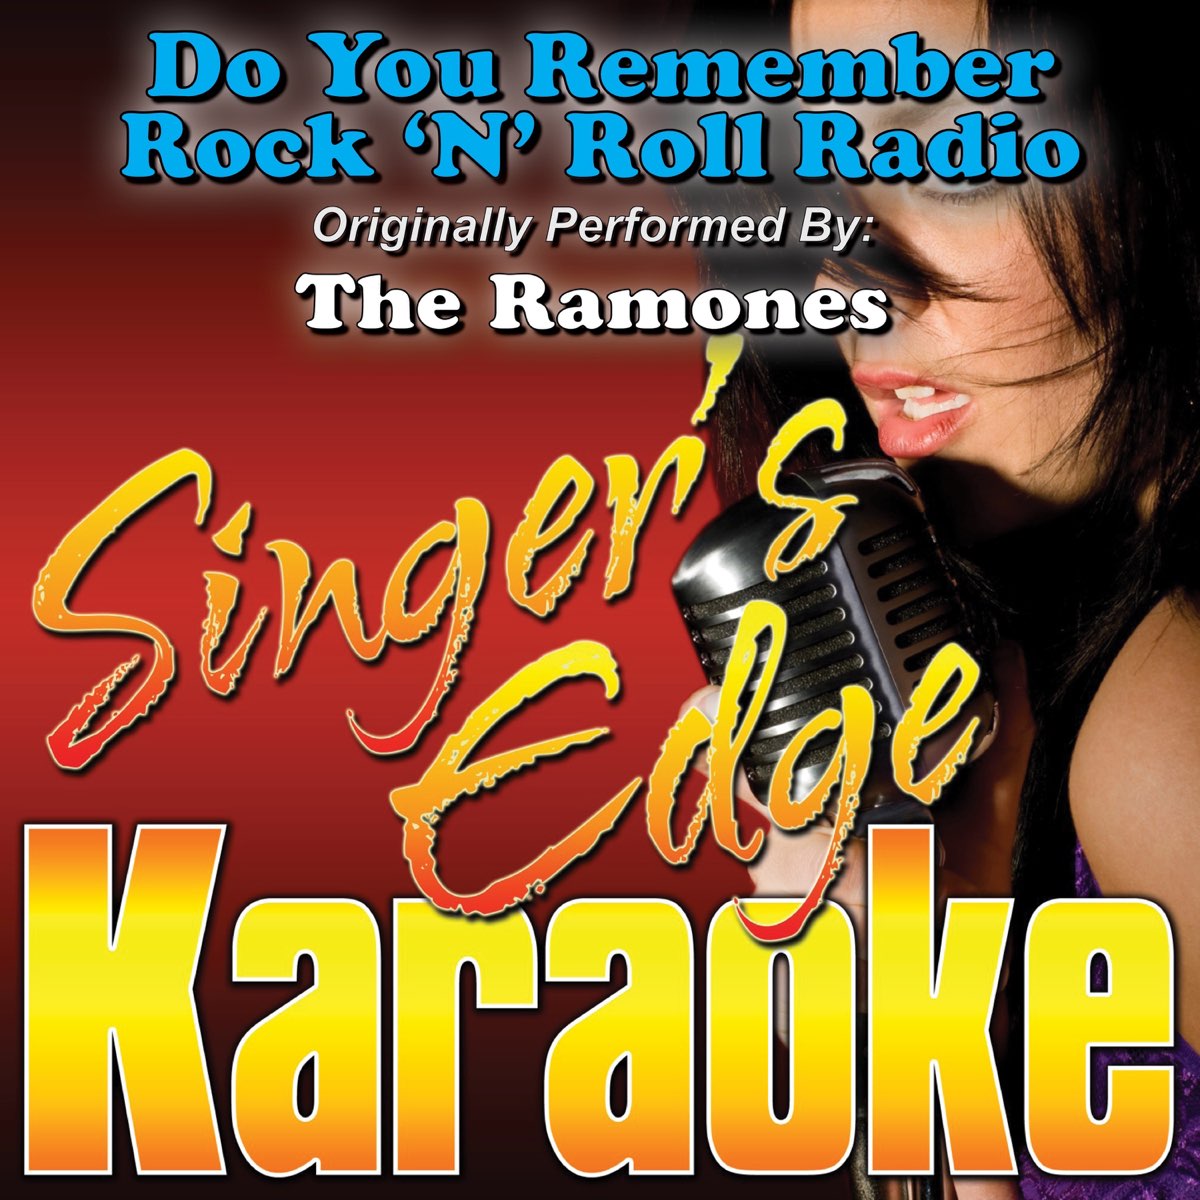 Do You Remember Rock 'N' Roll Radio (Originally Performed By the Ramones)  [Karaoke Version] - Single - Album by Singer's Edge Karaoke - Apple Music